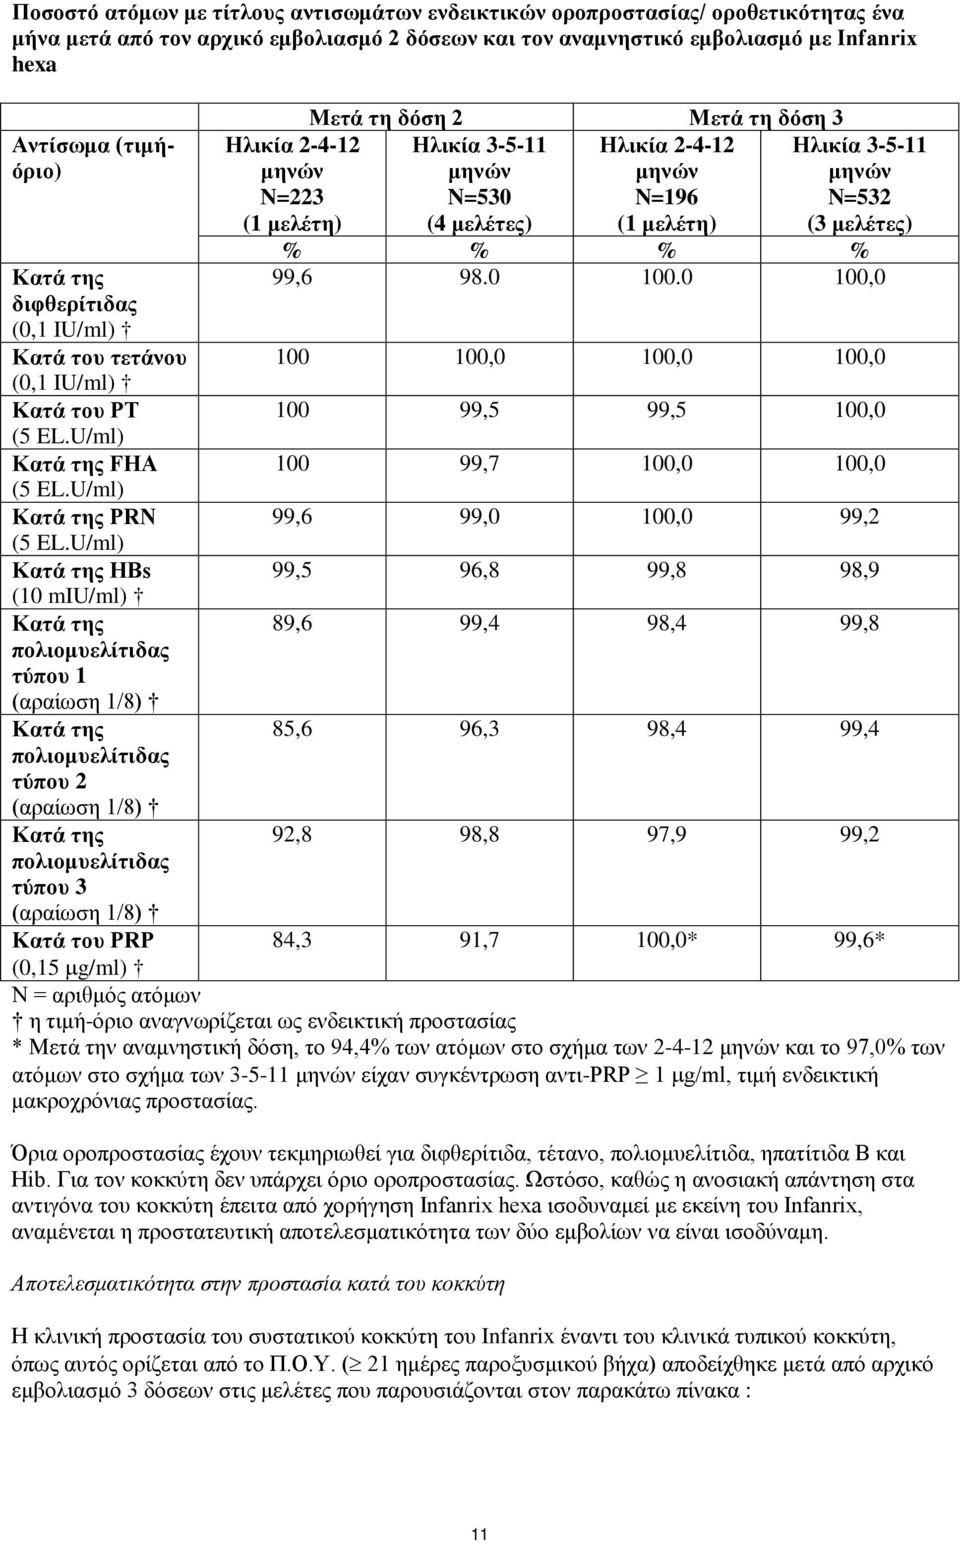 U/ml) Κατά της HBs (10 miu/ml) Κατά της πολιομυελίτιδας τύπου 1 (αραίωση 1/8) Κατά της πολιομυελίτιδας τύπου 2 (αραίωση 1/8) Κατά της πολιομυελίτιδας τύπου 3 (αραίωση 1/8) Κατά του PRP Ηλικία 2-4-12